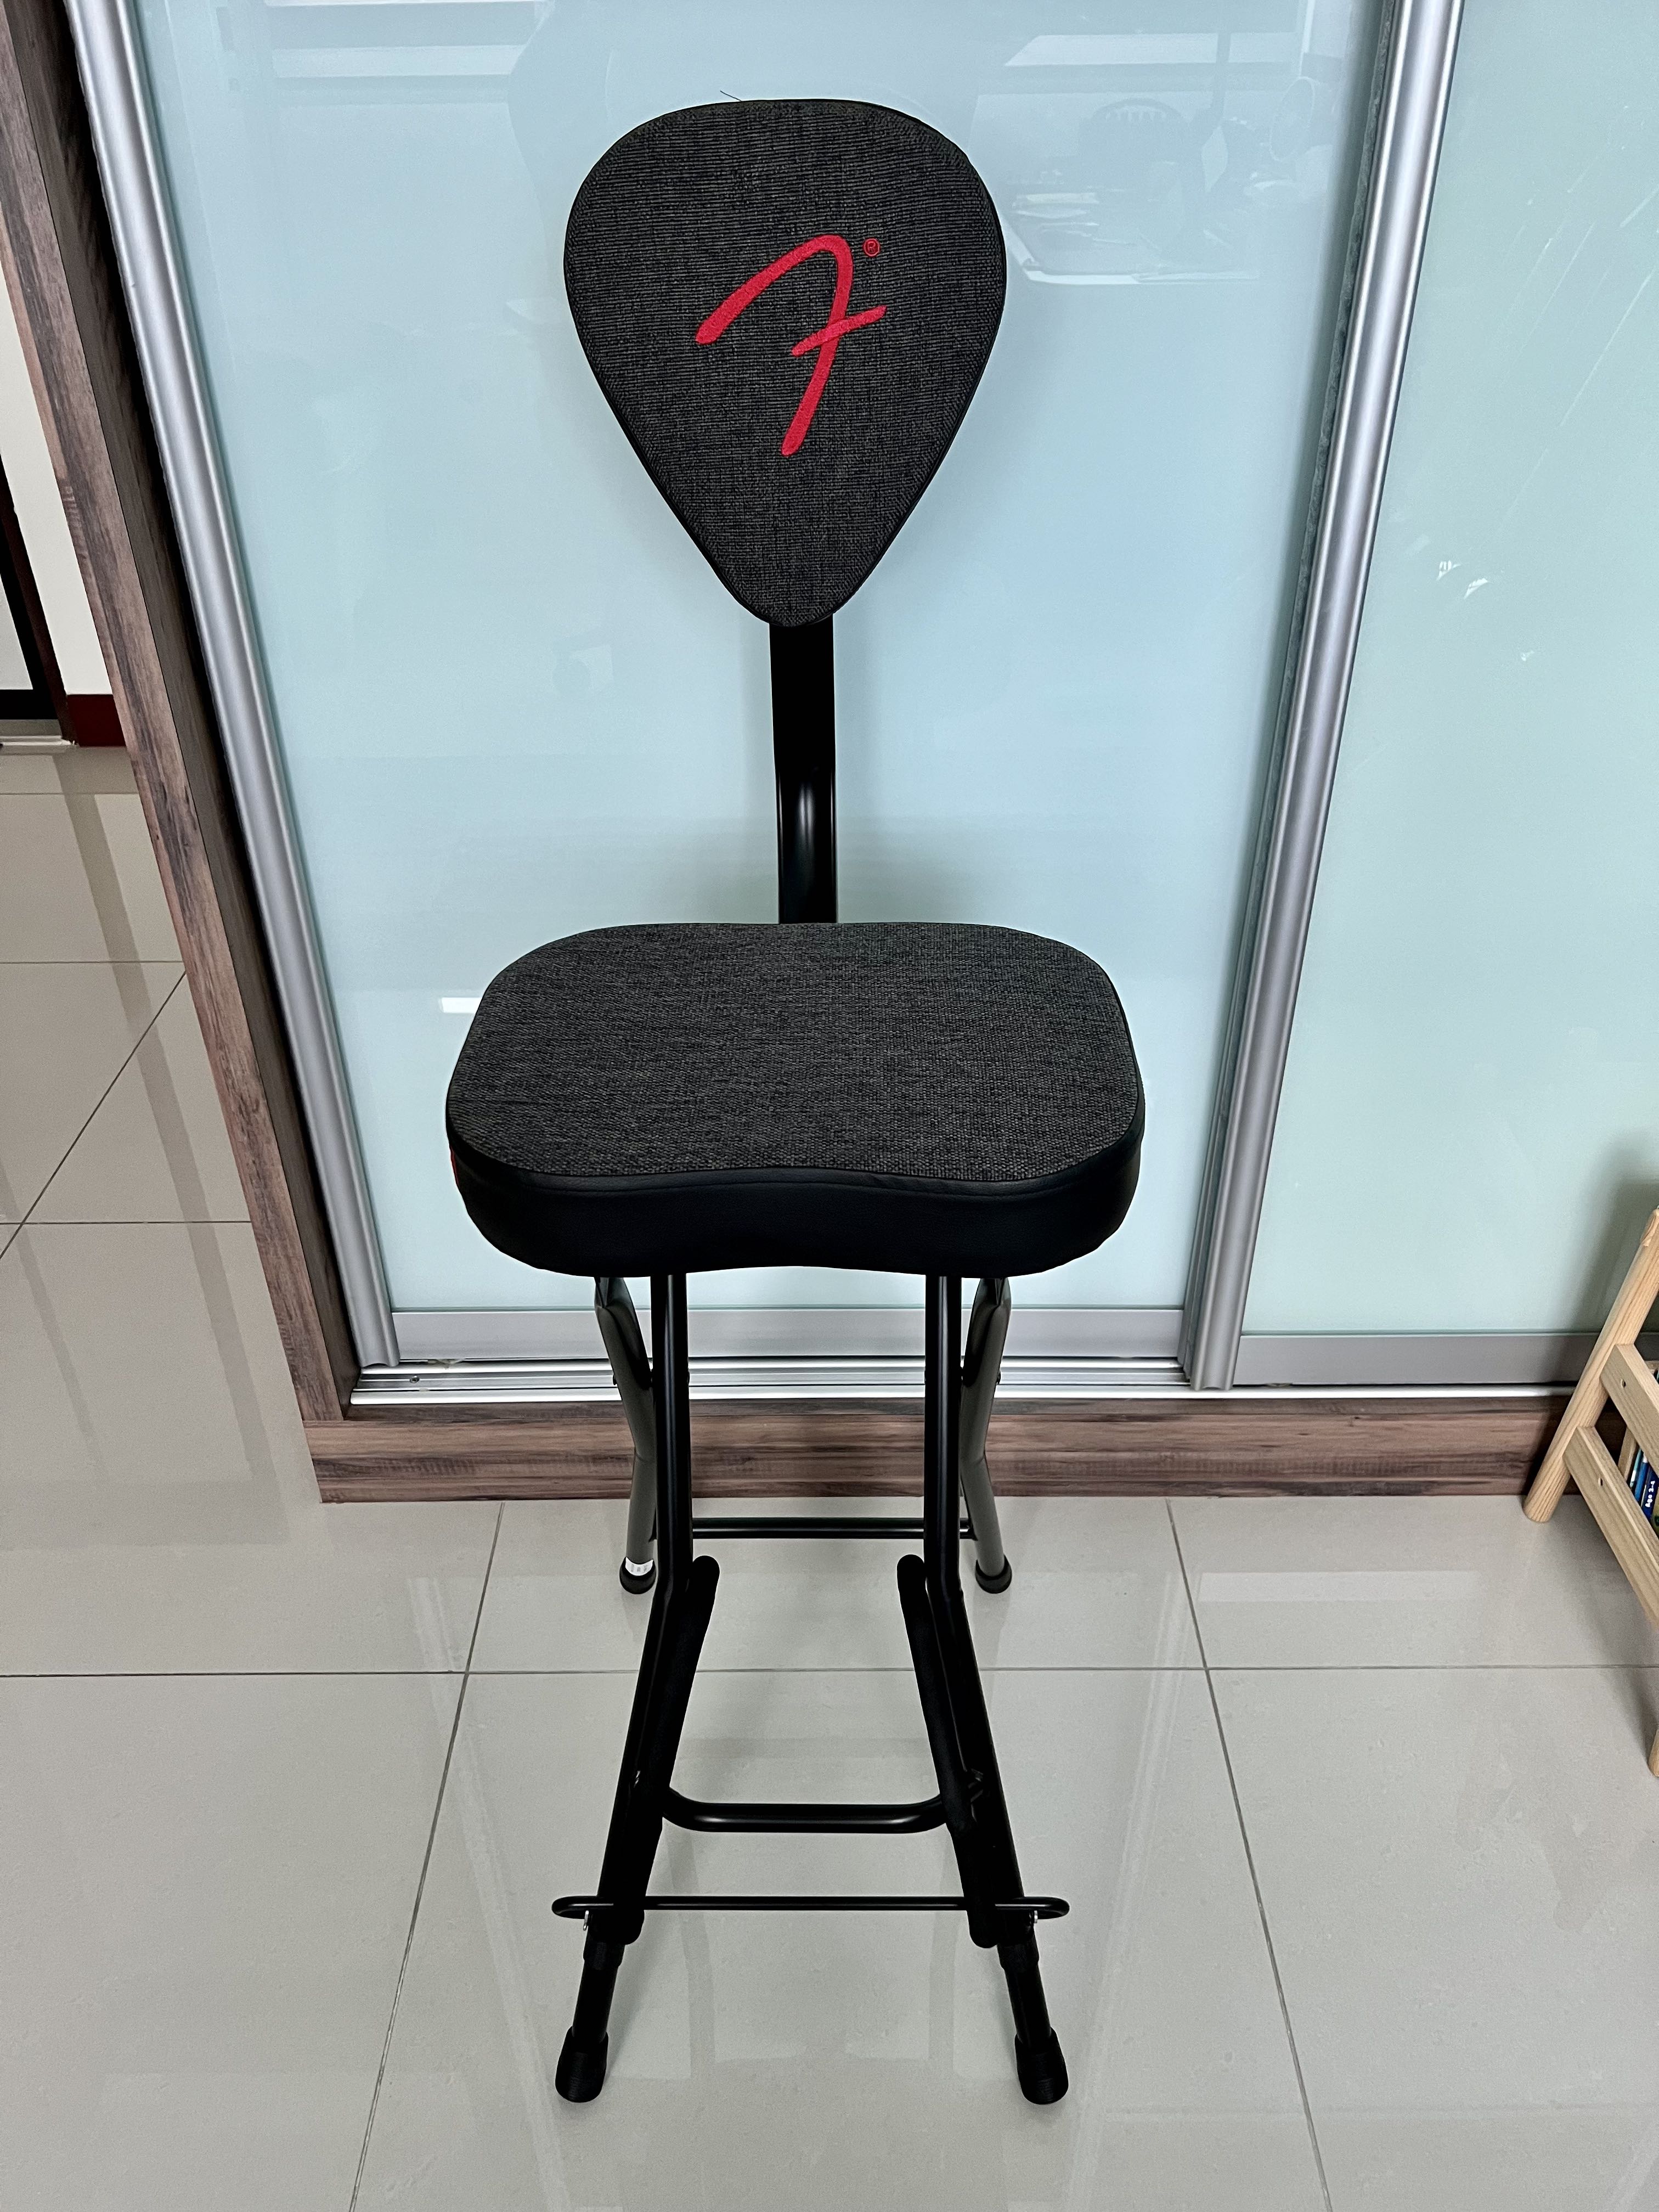 Fender 351 Studio Seat/ Guitar Stand Combo, Foldable, Furniture